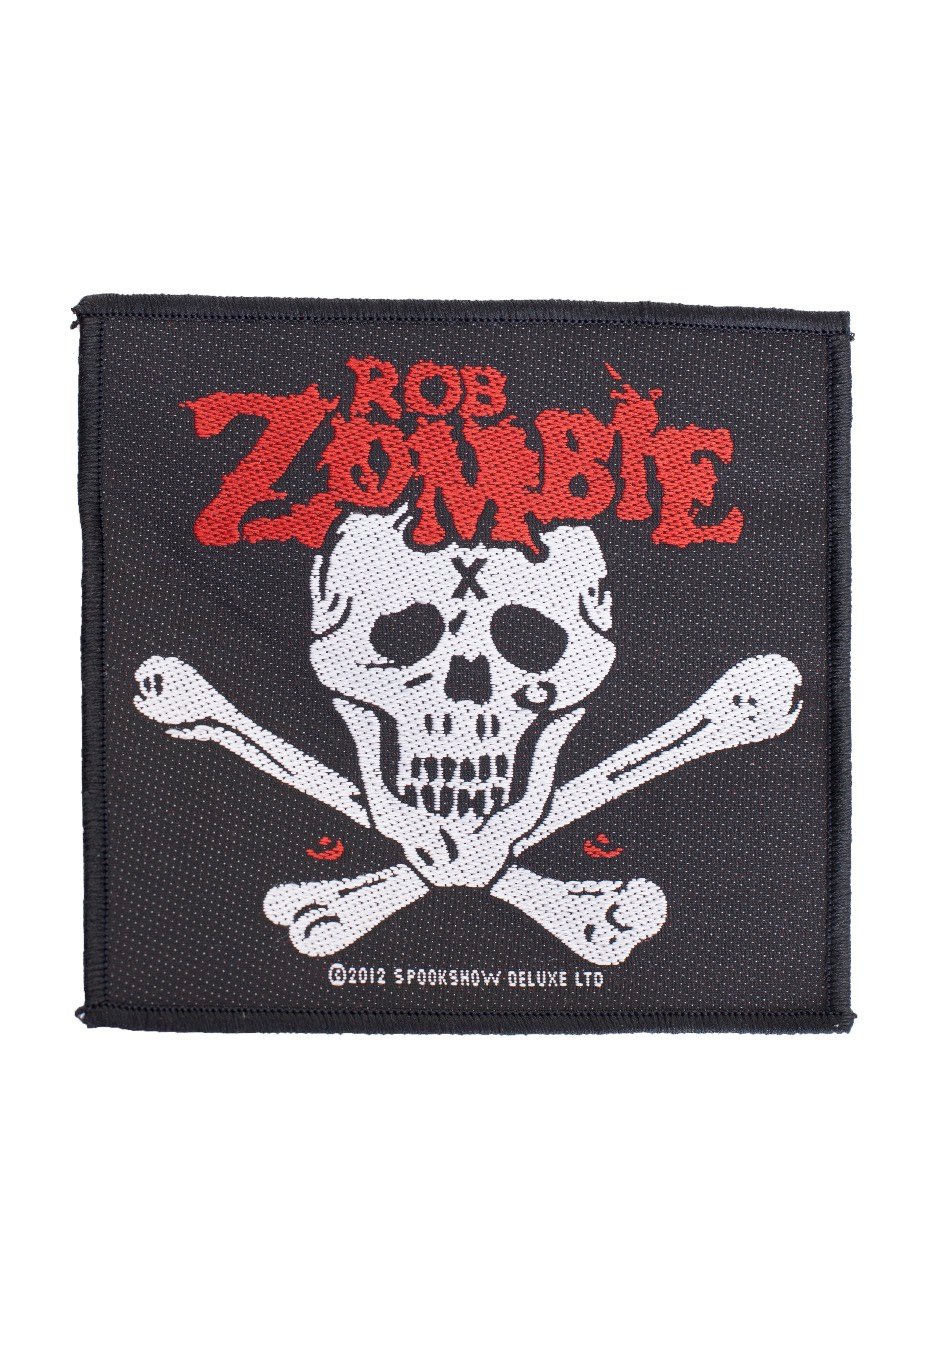 Rob Zombie - Dead Return - Patch